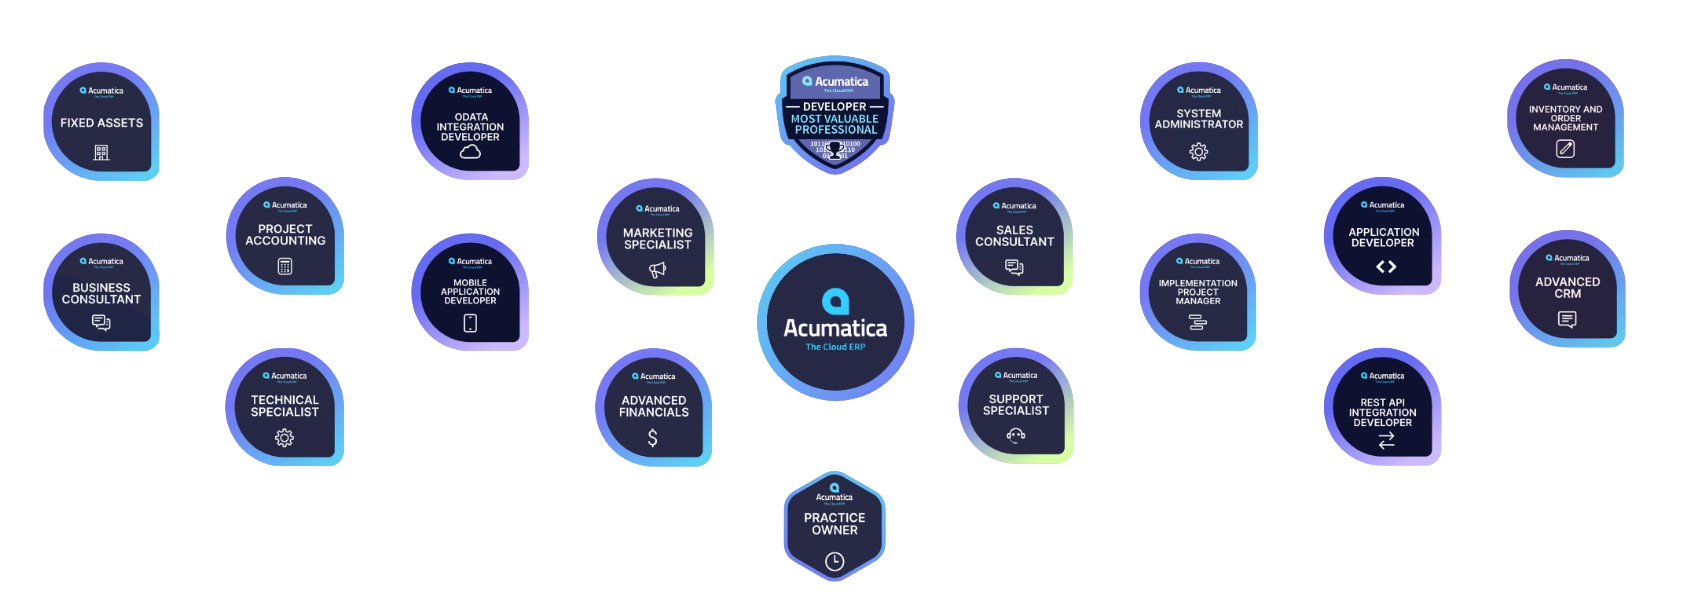 Acumatica certifications. Badges. AcuPower LTD